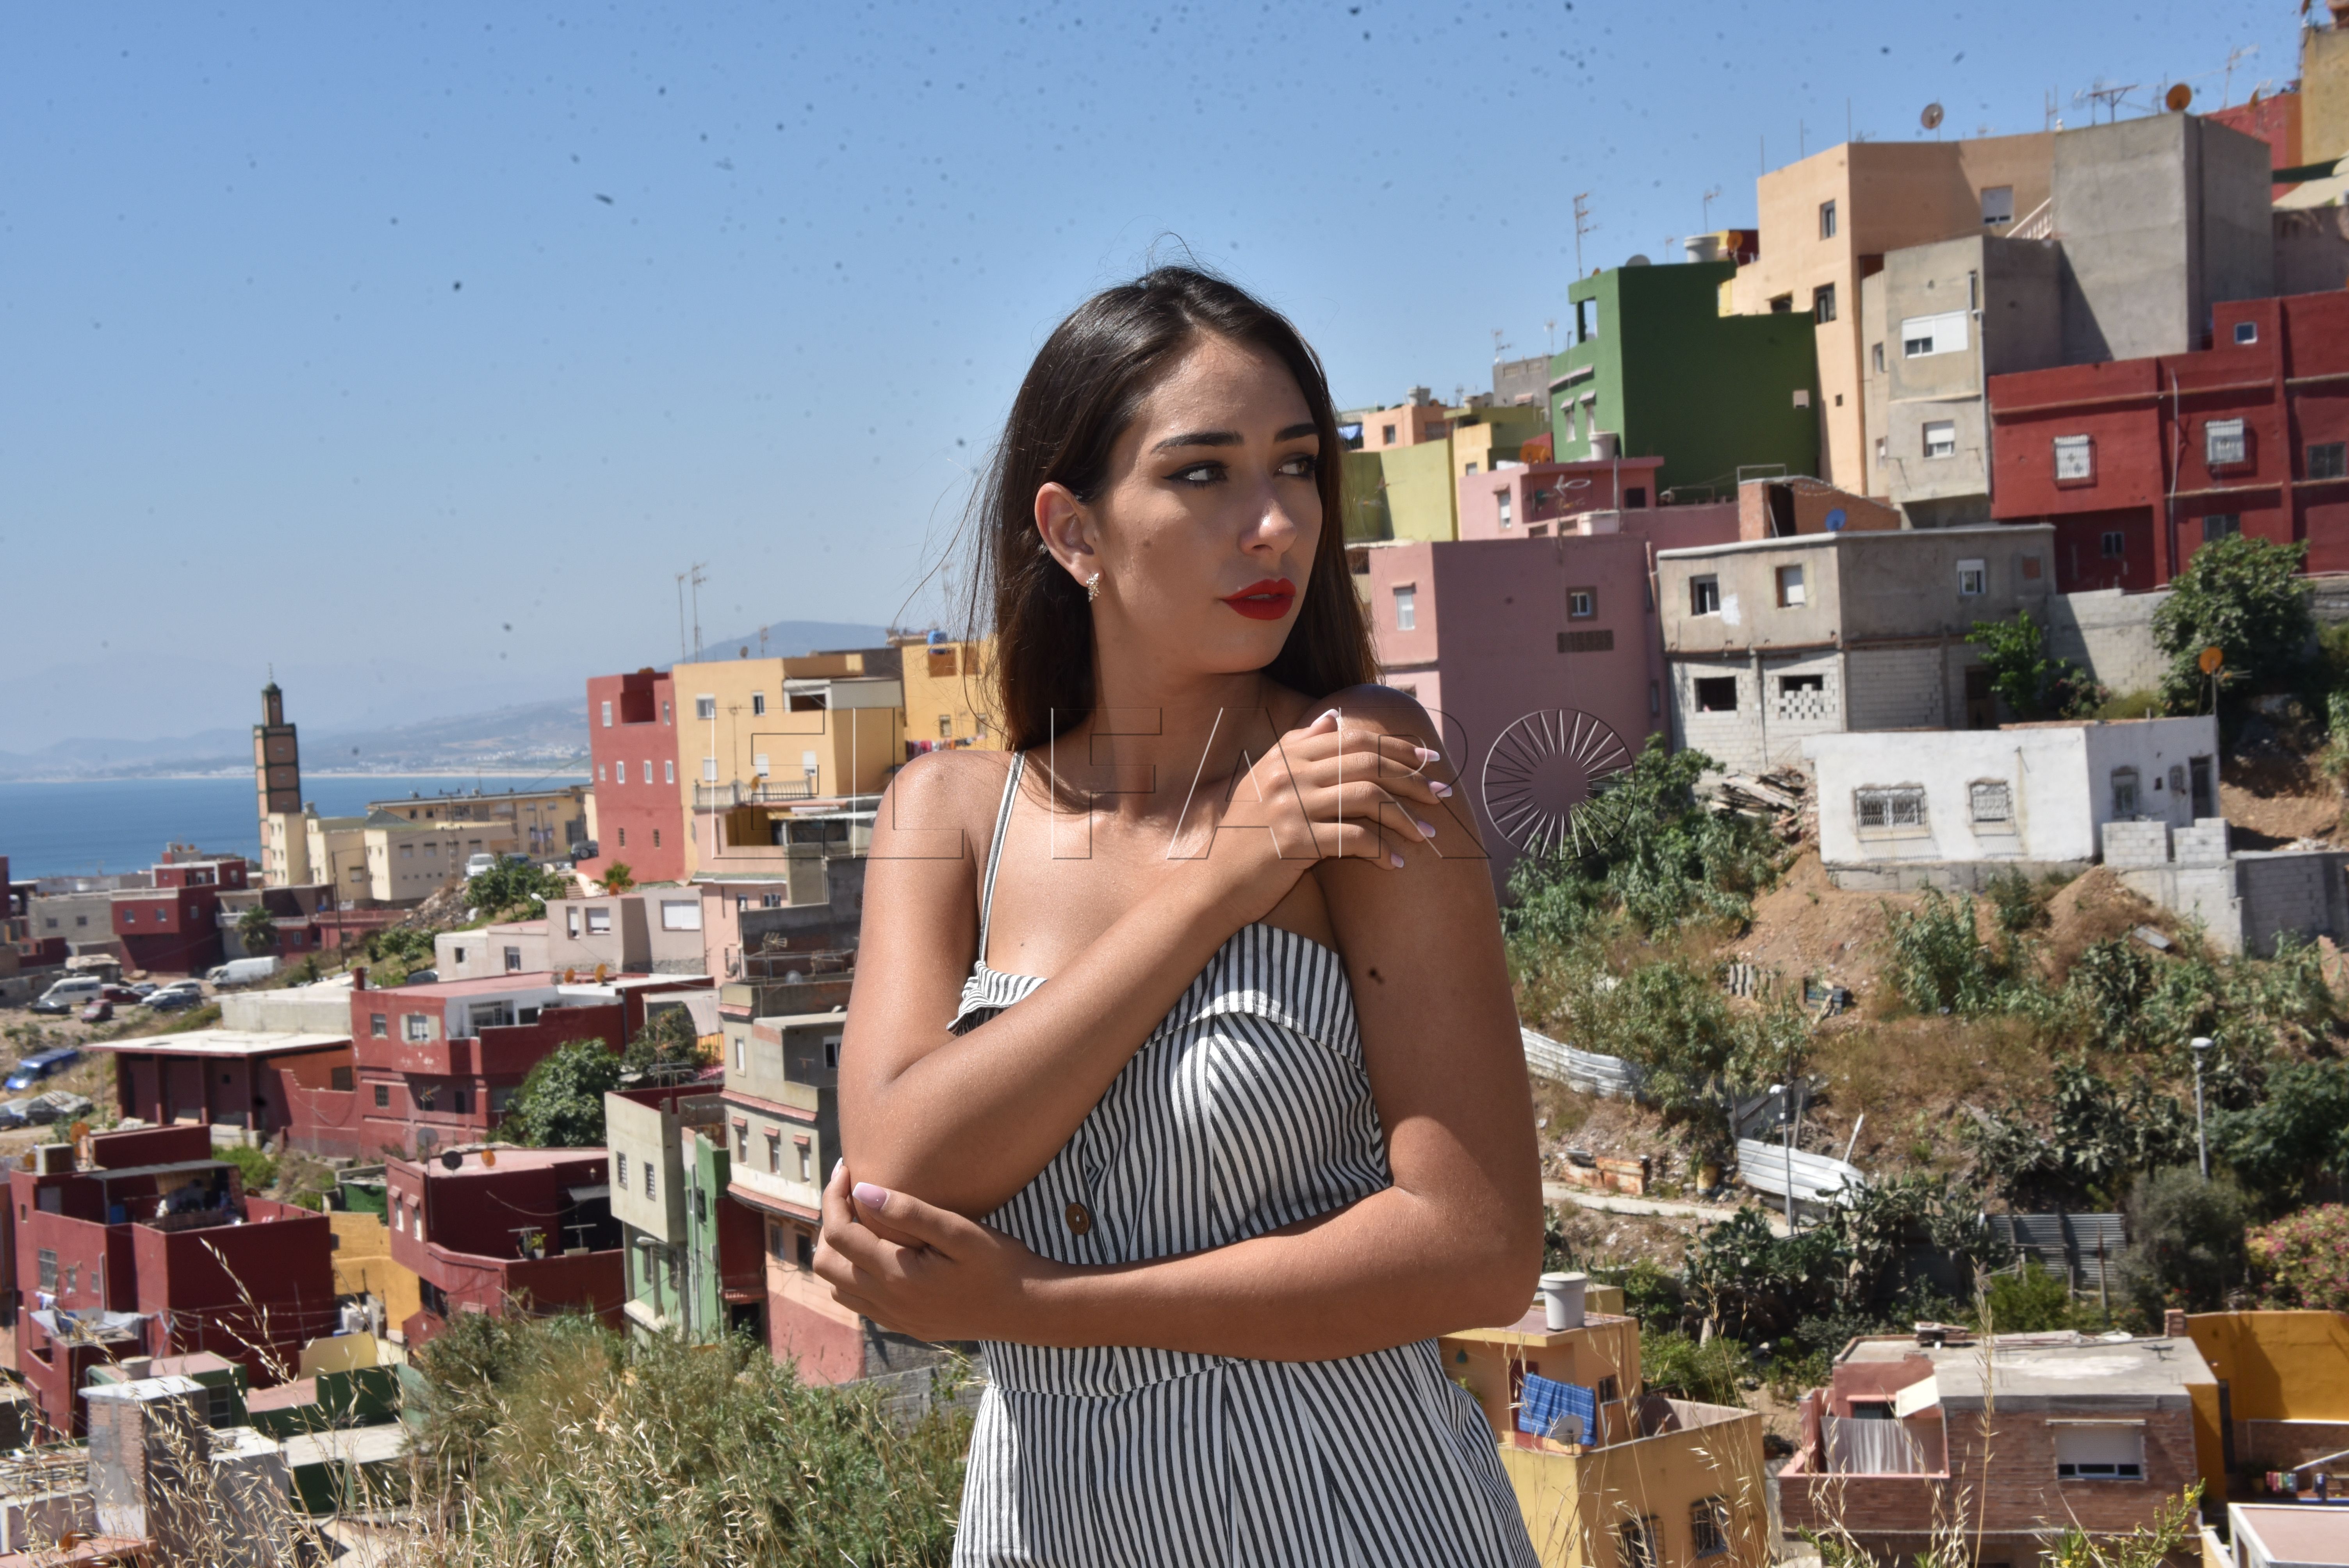 Feminista, futura guardia civil y modelo: Sara Martínez, la candidata ceutí a Miss Mundo 2019 1sLPtE